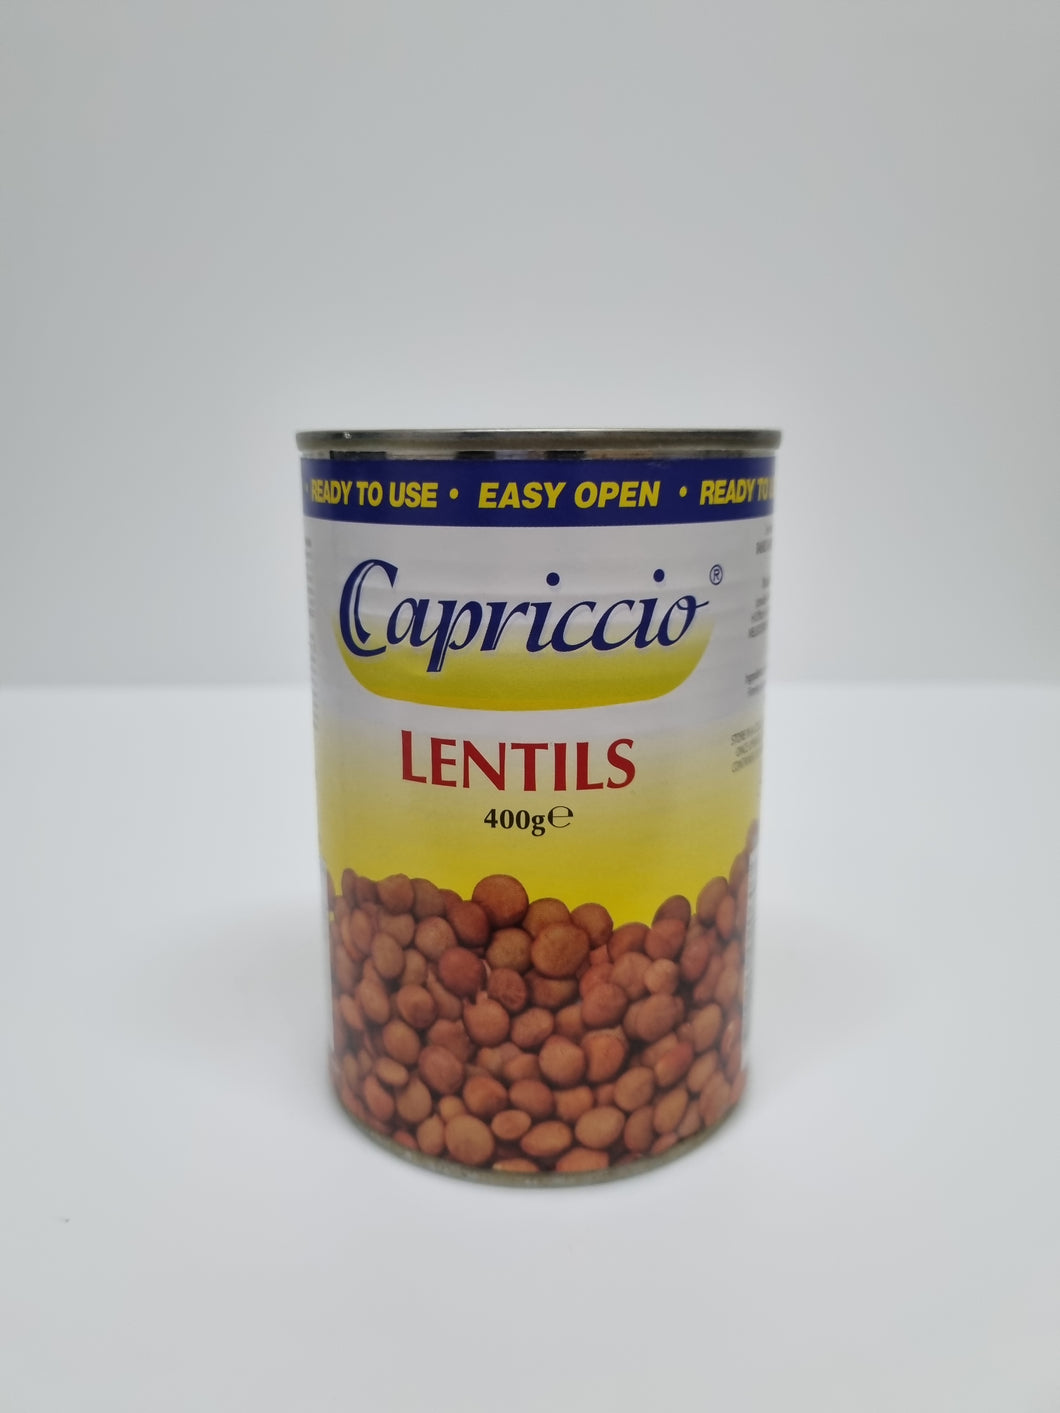 Can- Lentils